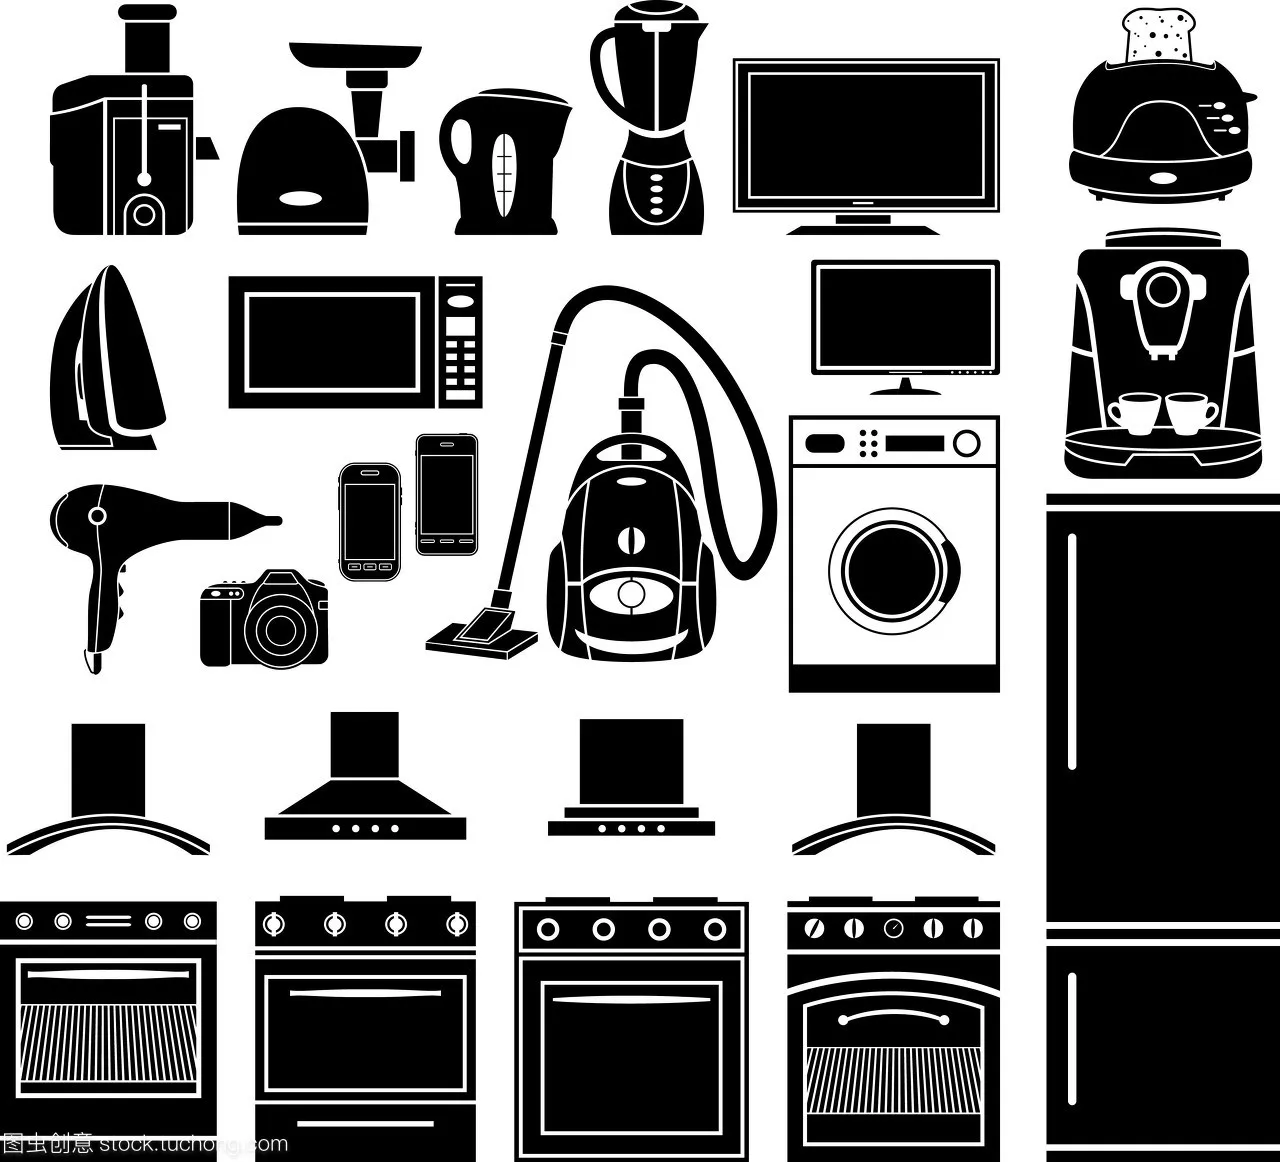 Иконки кухонной техники